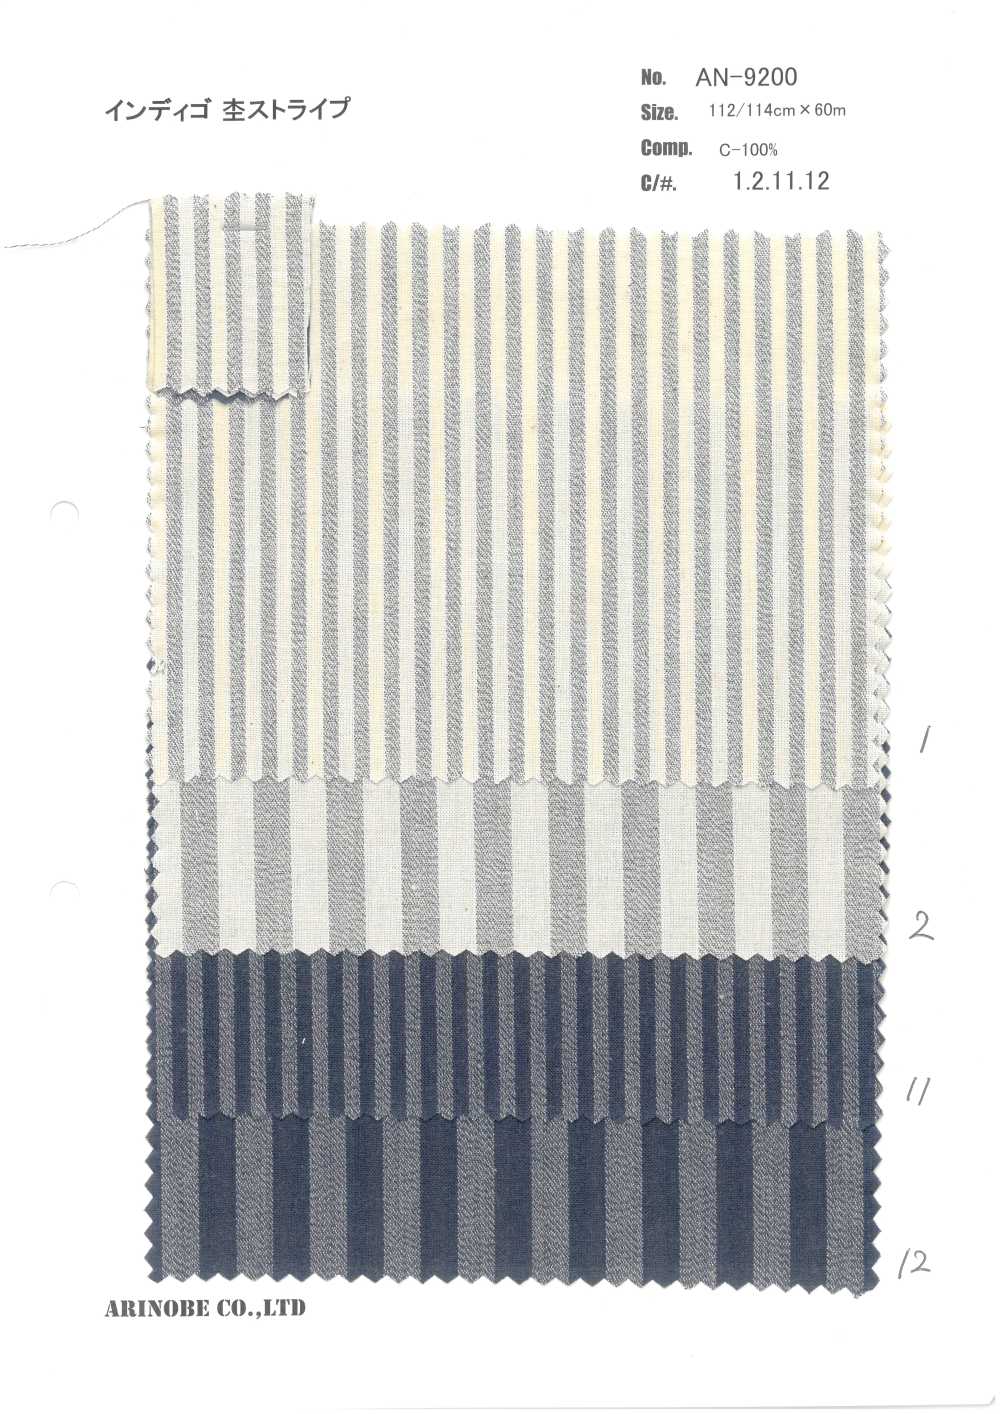 AN-9200 Indigo Heather Stripe[Textilgewebe] ARINOBE CO., LTD.